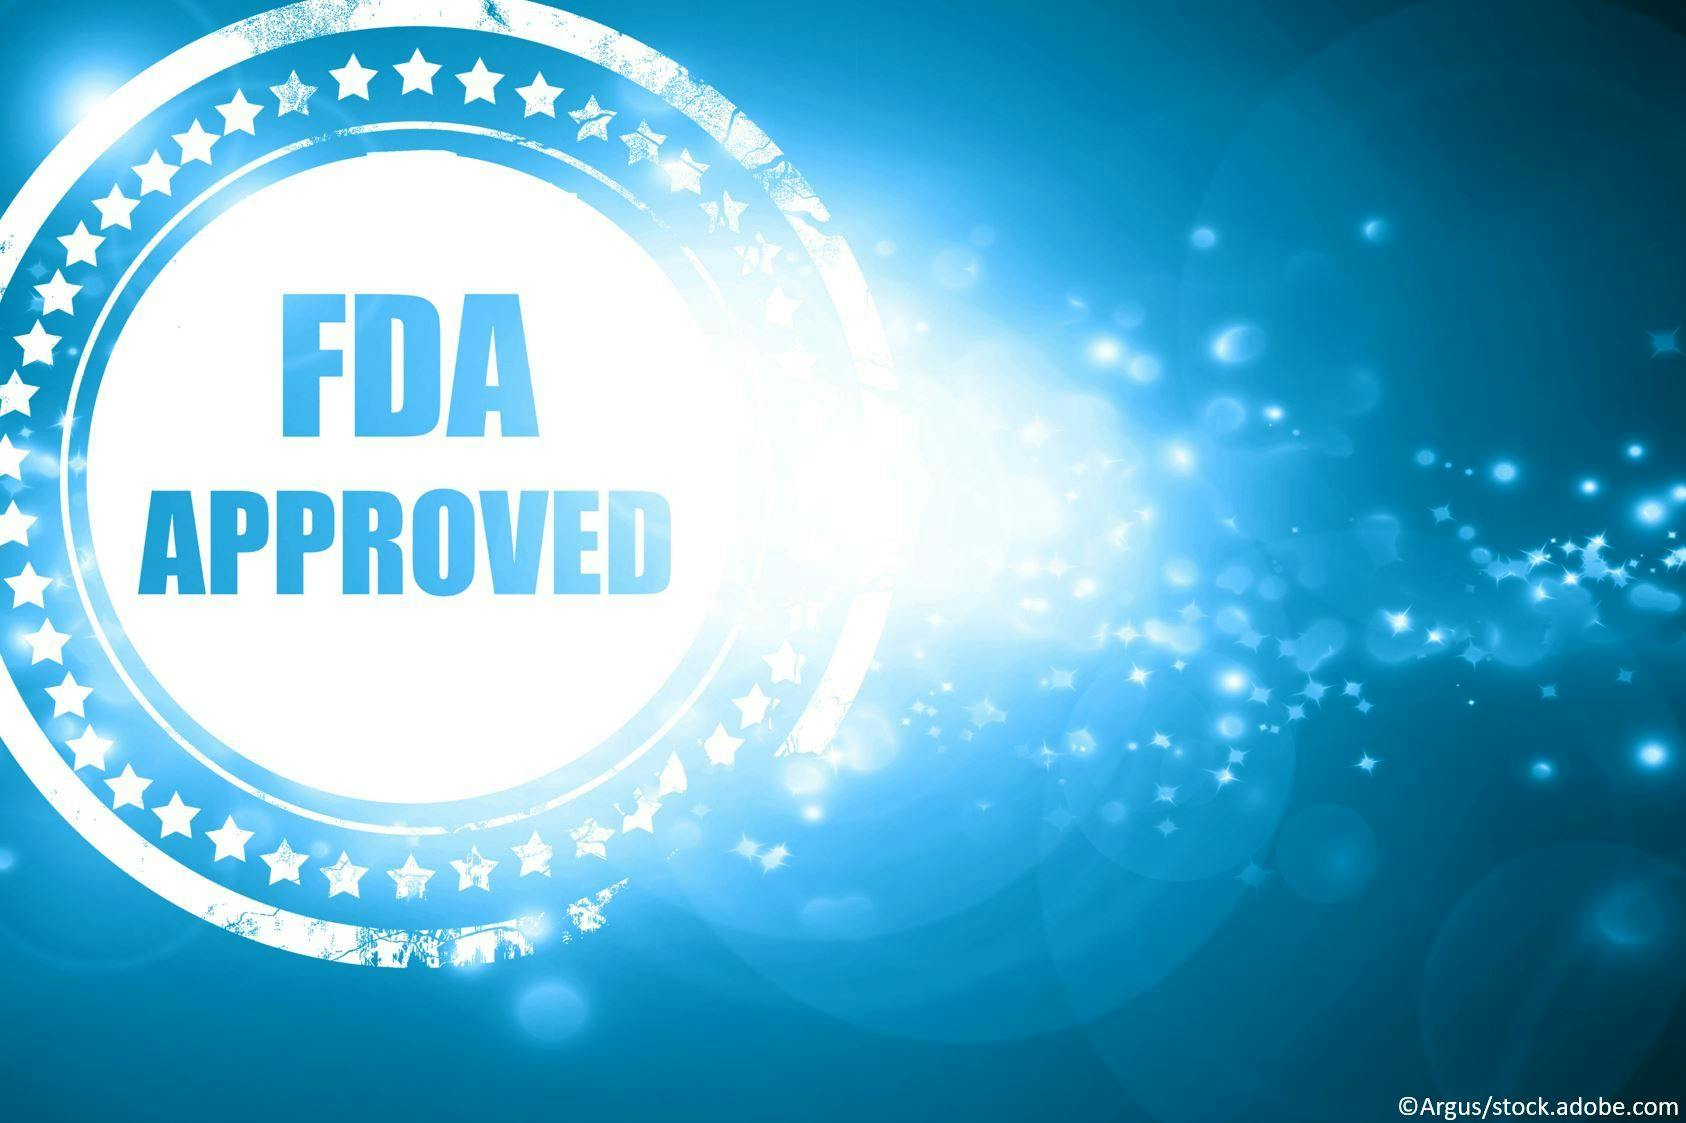 FDA approved, fda approval